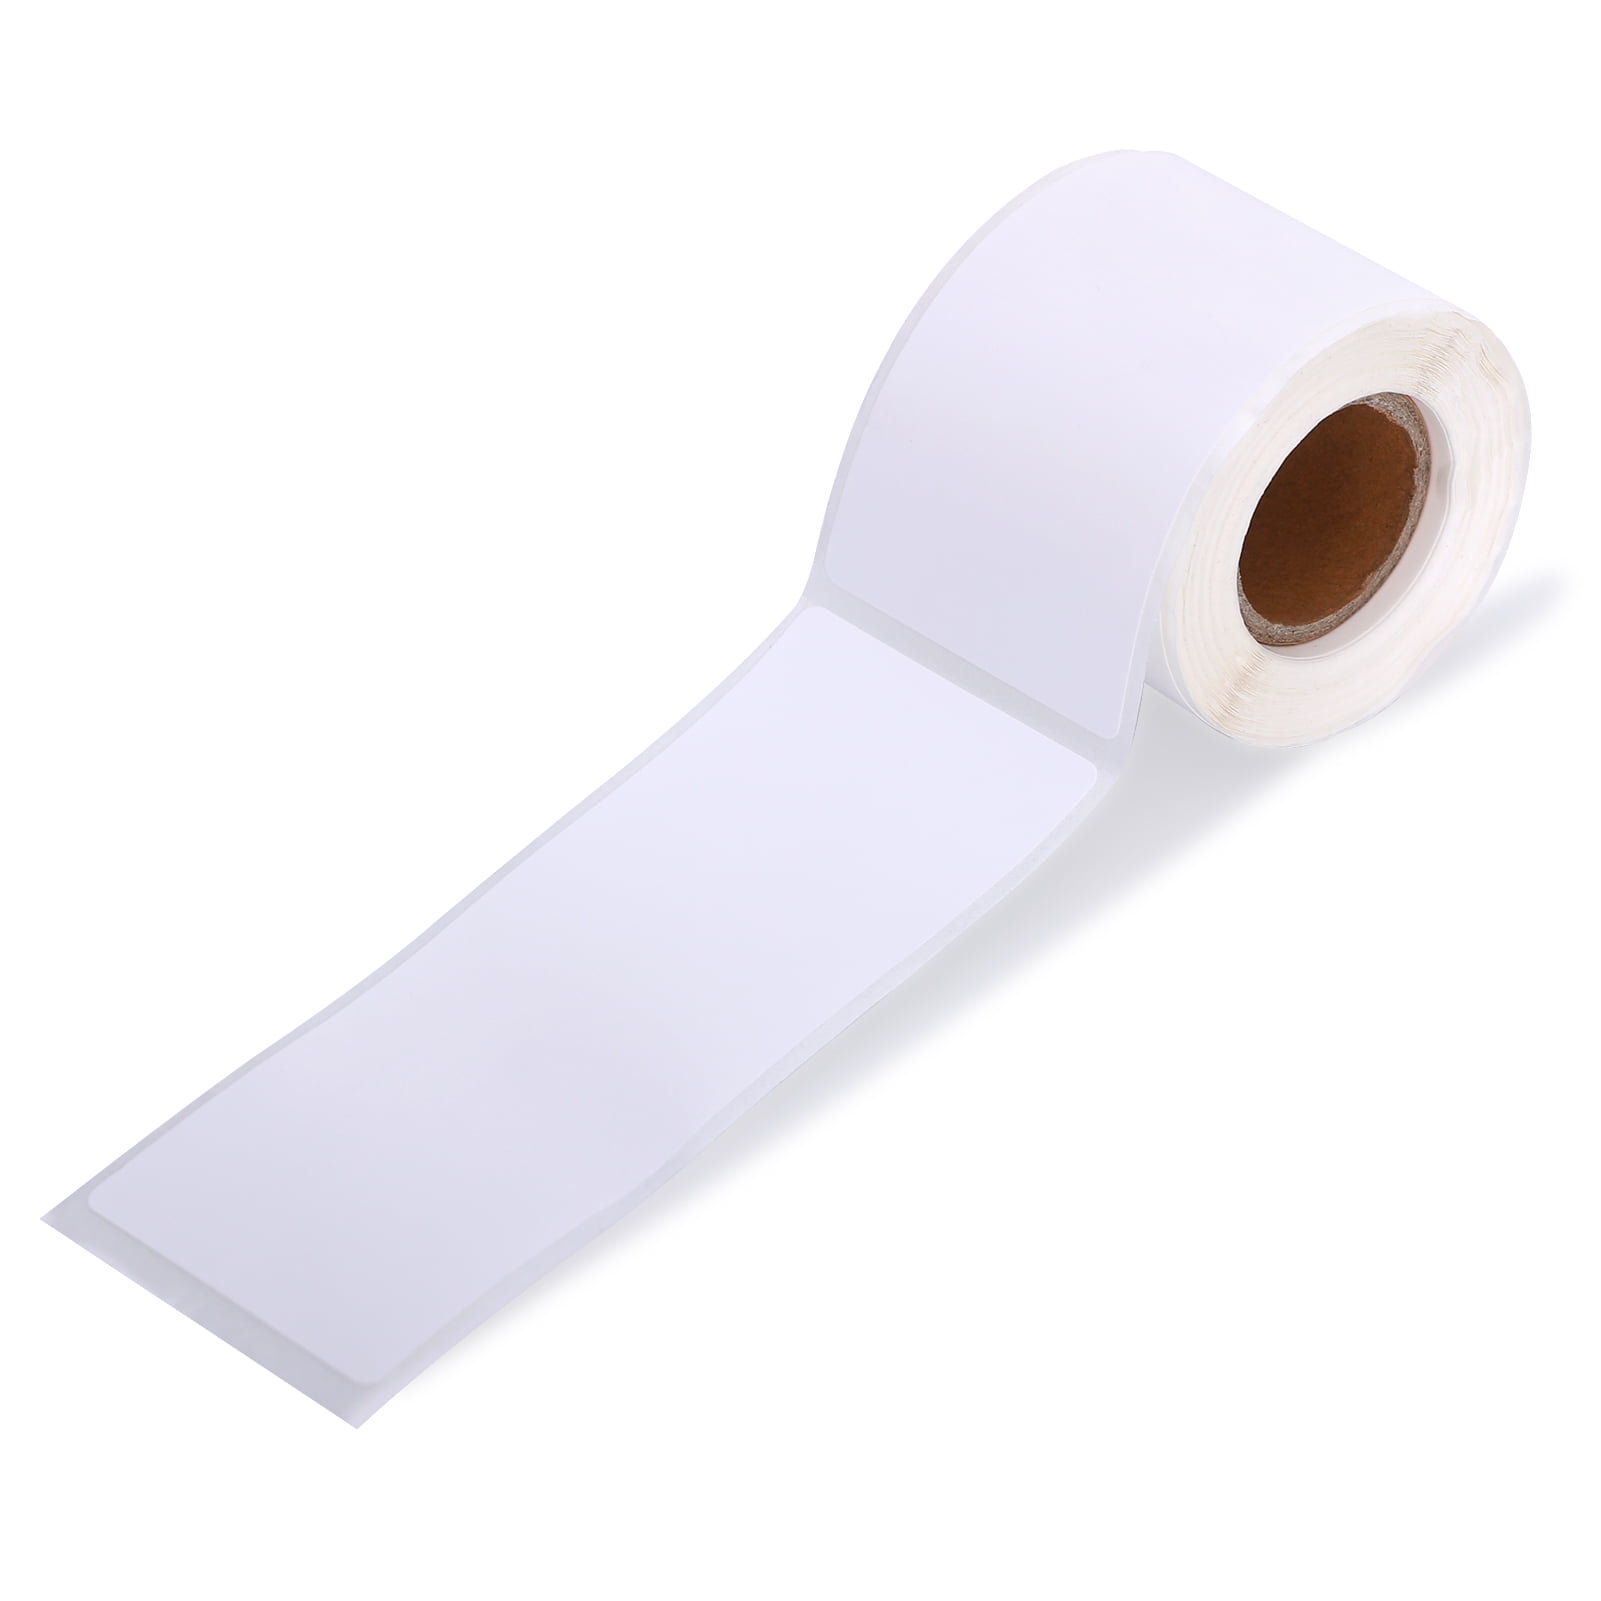 Price Print Supplies Package Label Thermal Sticker Adhesive Paper Waterproof 